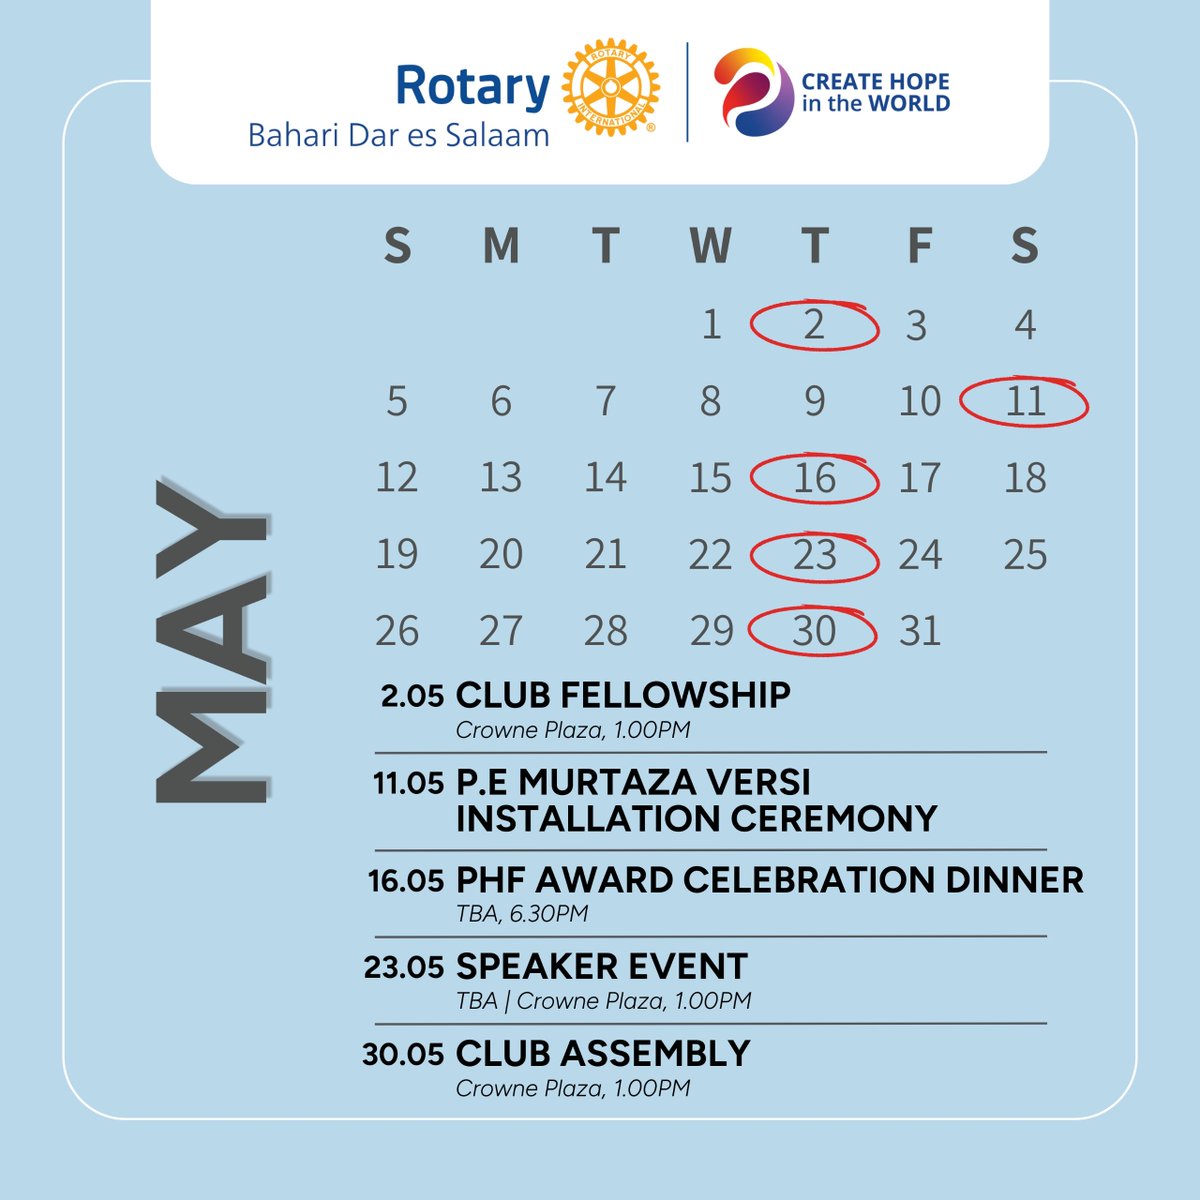 Welcome to May! 
@rotary 

#rotaryclub #rotarybaharidar #rotaryinternational #ServeToChangeLives #createhope